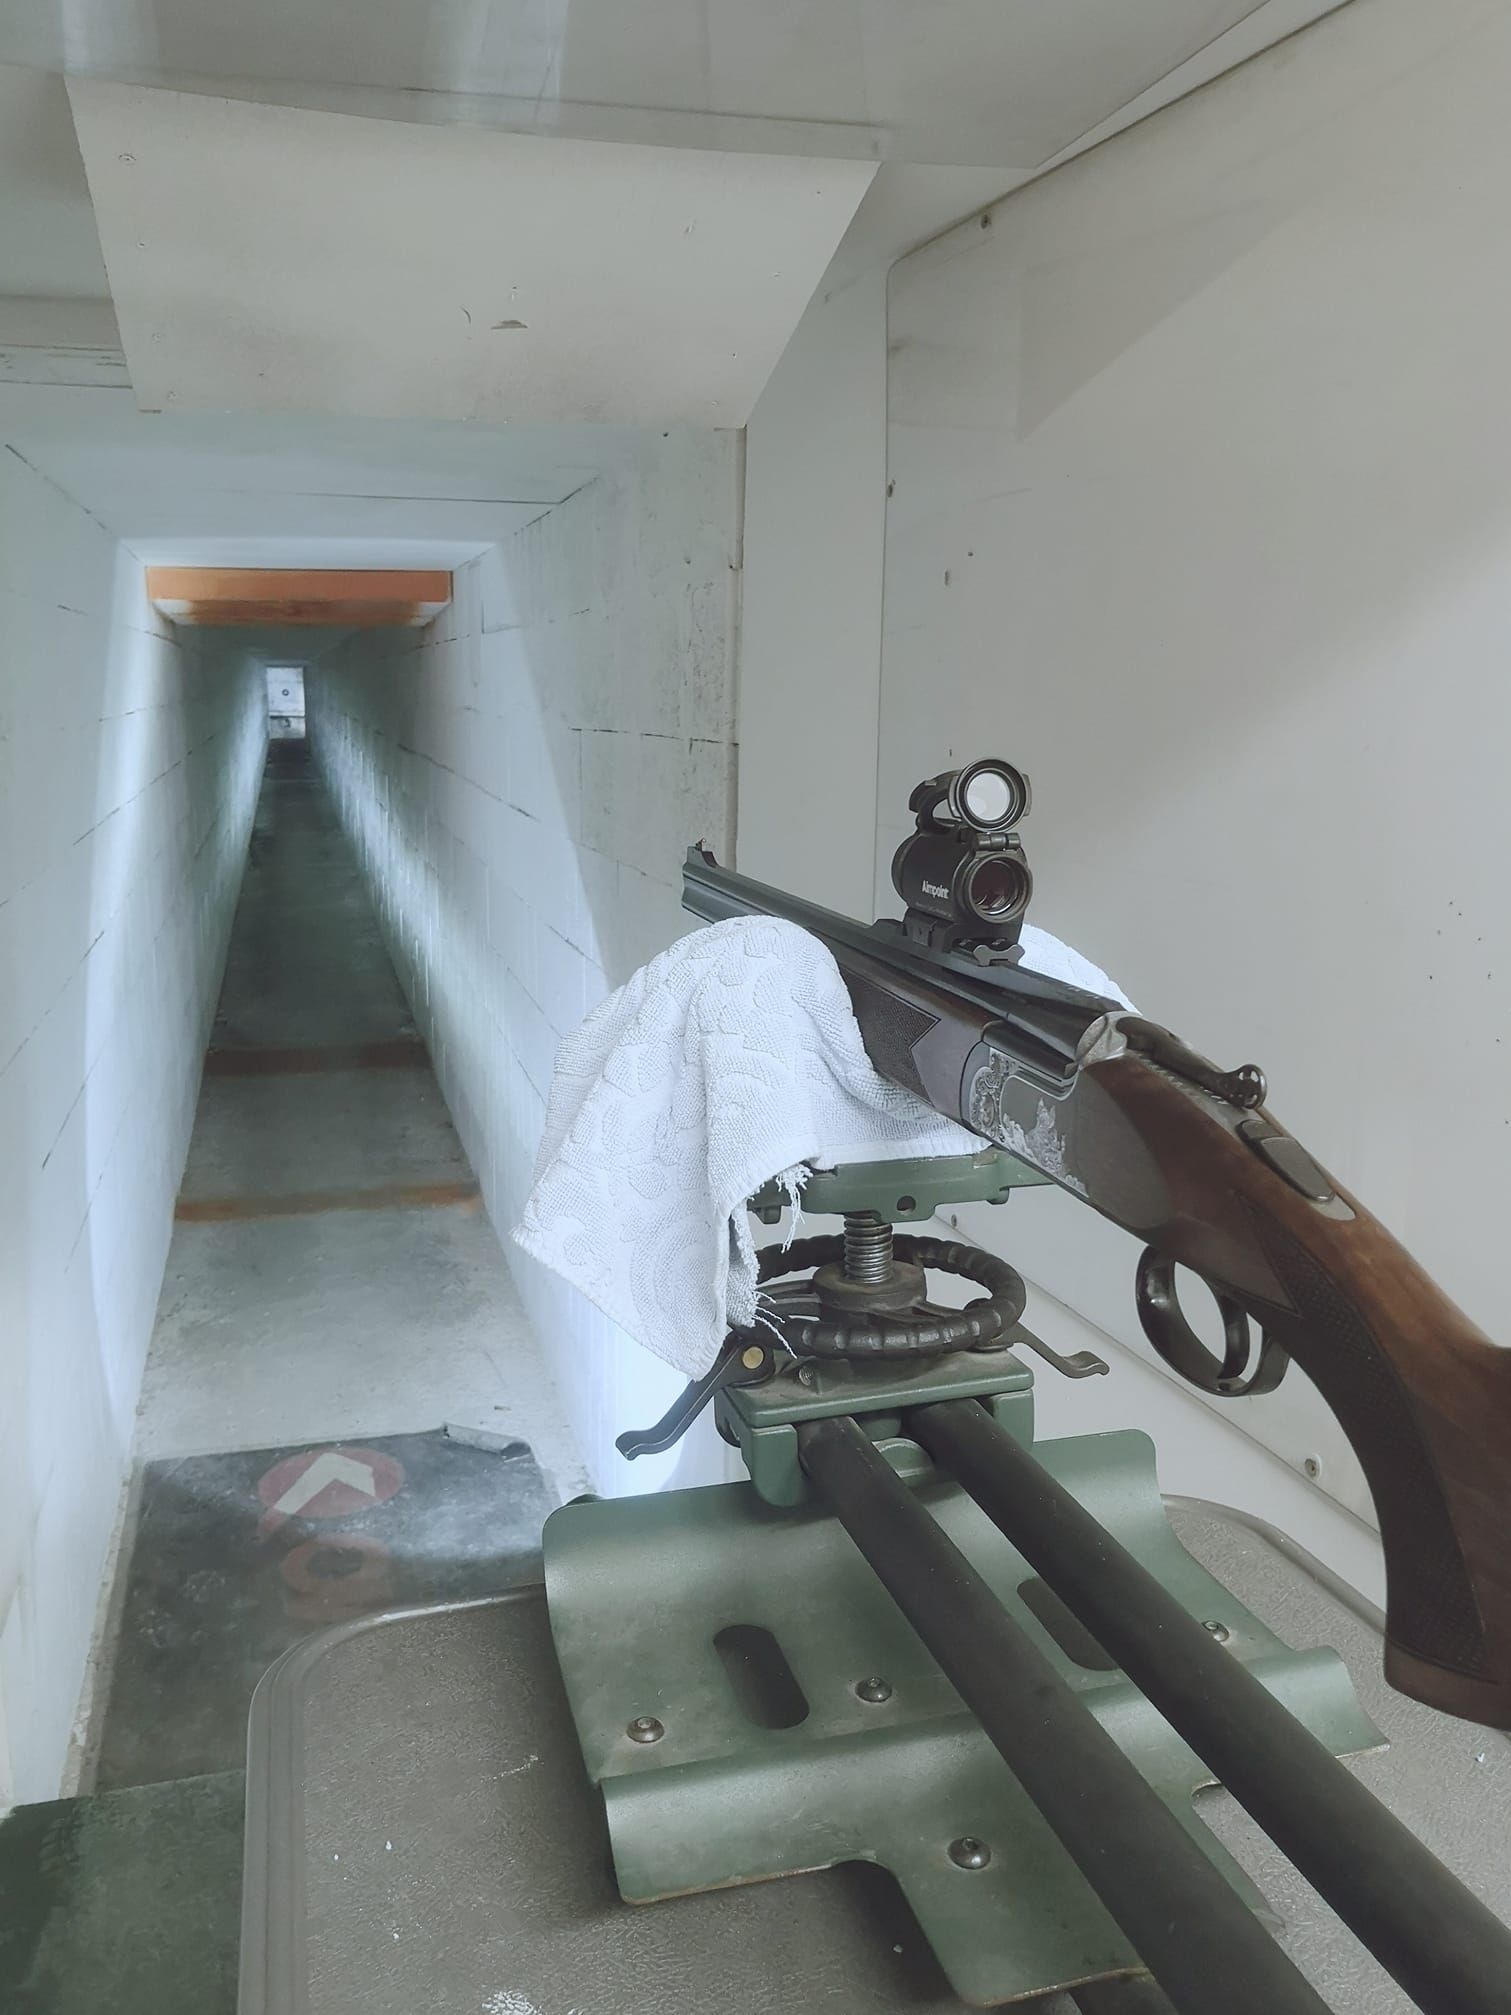 Tunnel de tir avec gros plan sur un fusil
